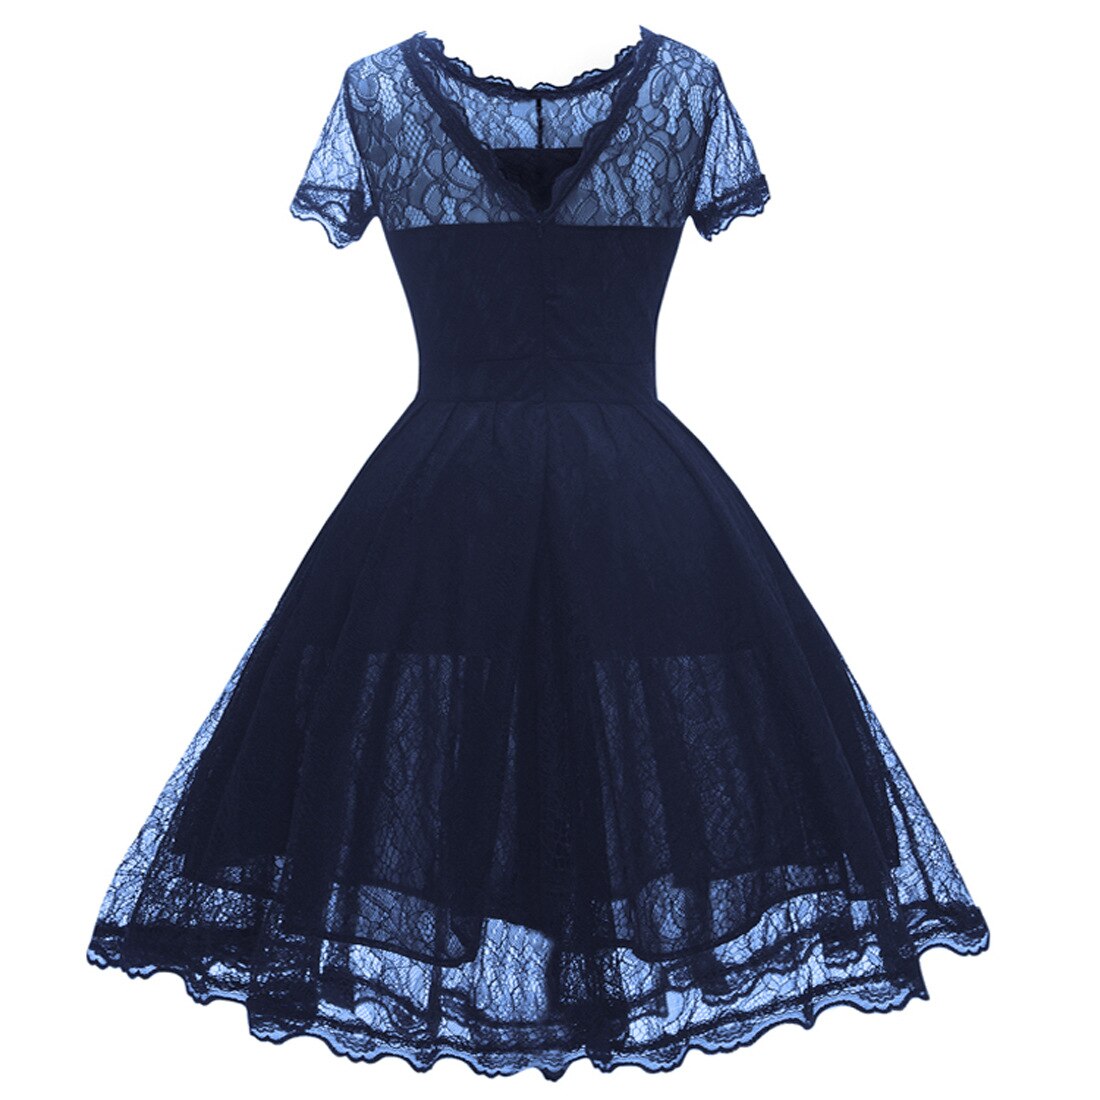 Spring New Women's Dress Solid Color Lady Vintage Lace Dress Hollow Long Casual Zipper Black Dresses Female Short Sleeve